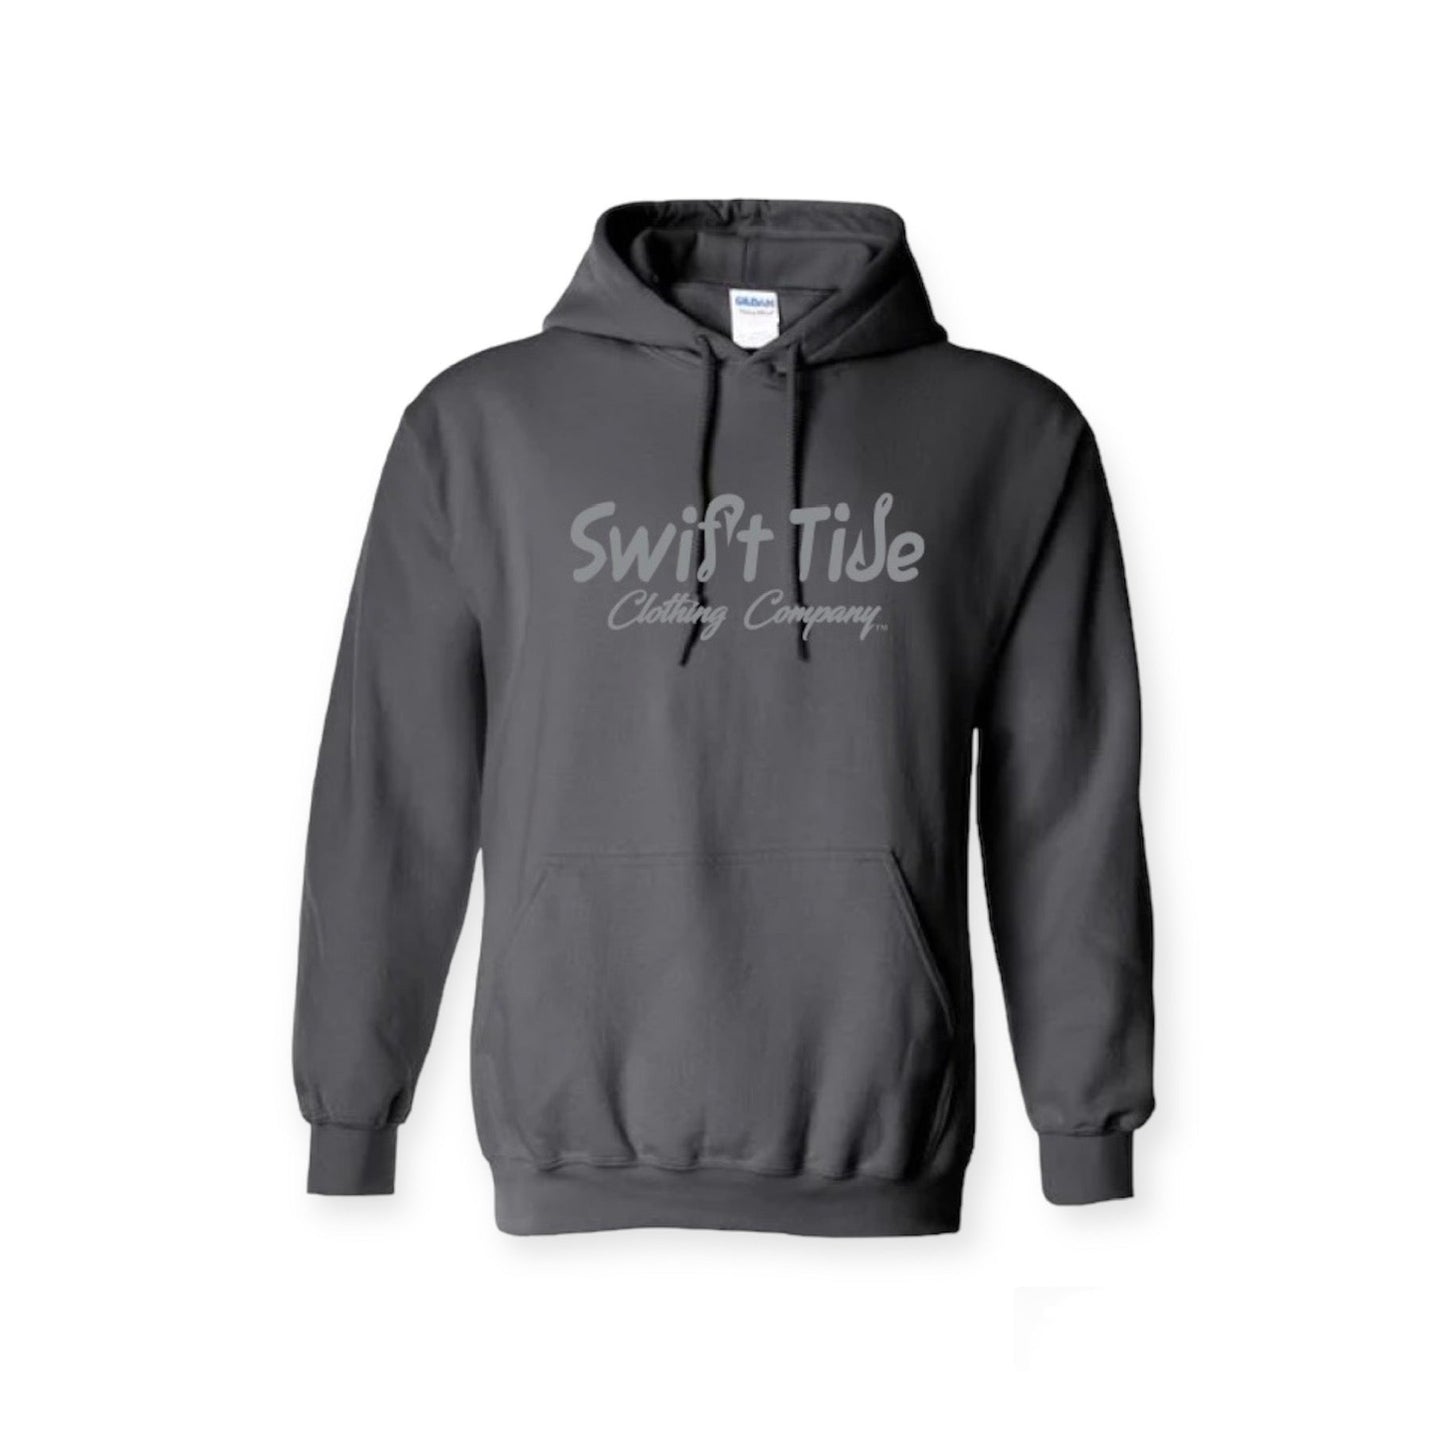 Logo Hoodie - Swift Tide Clothing Company